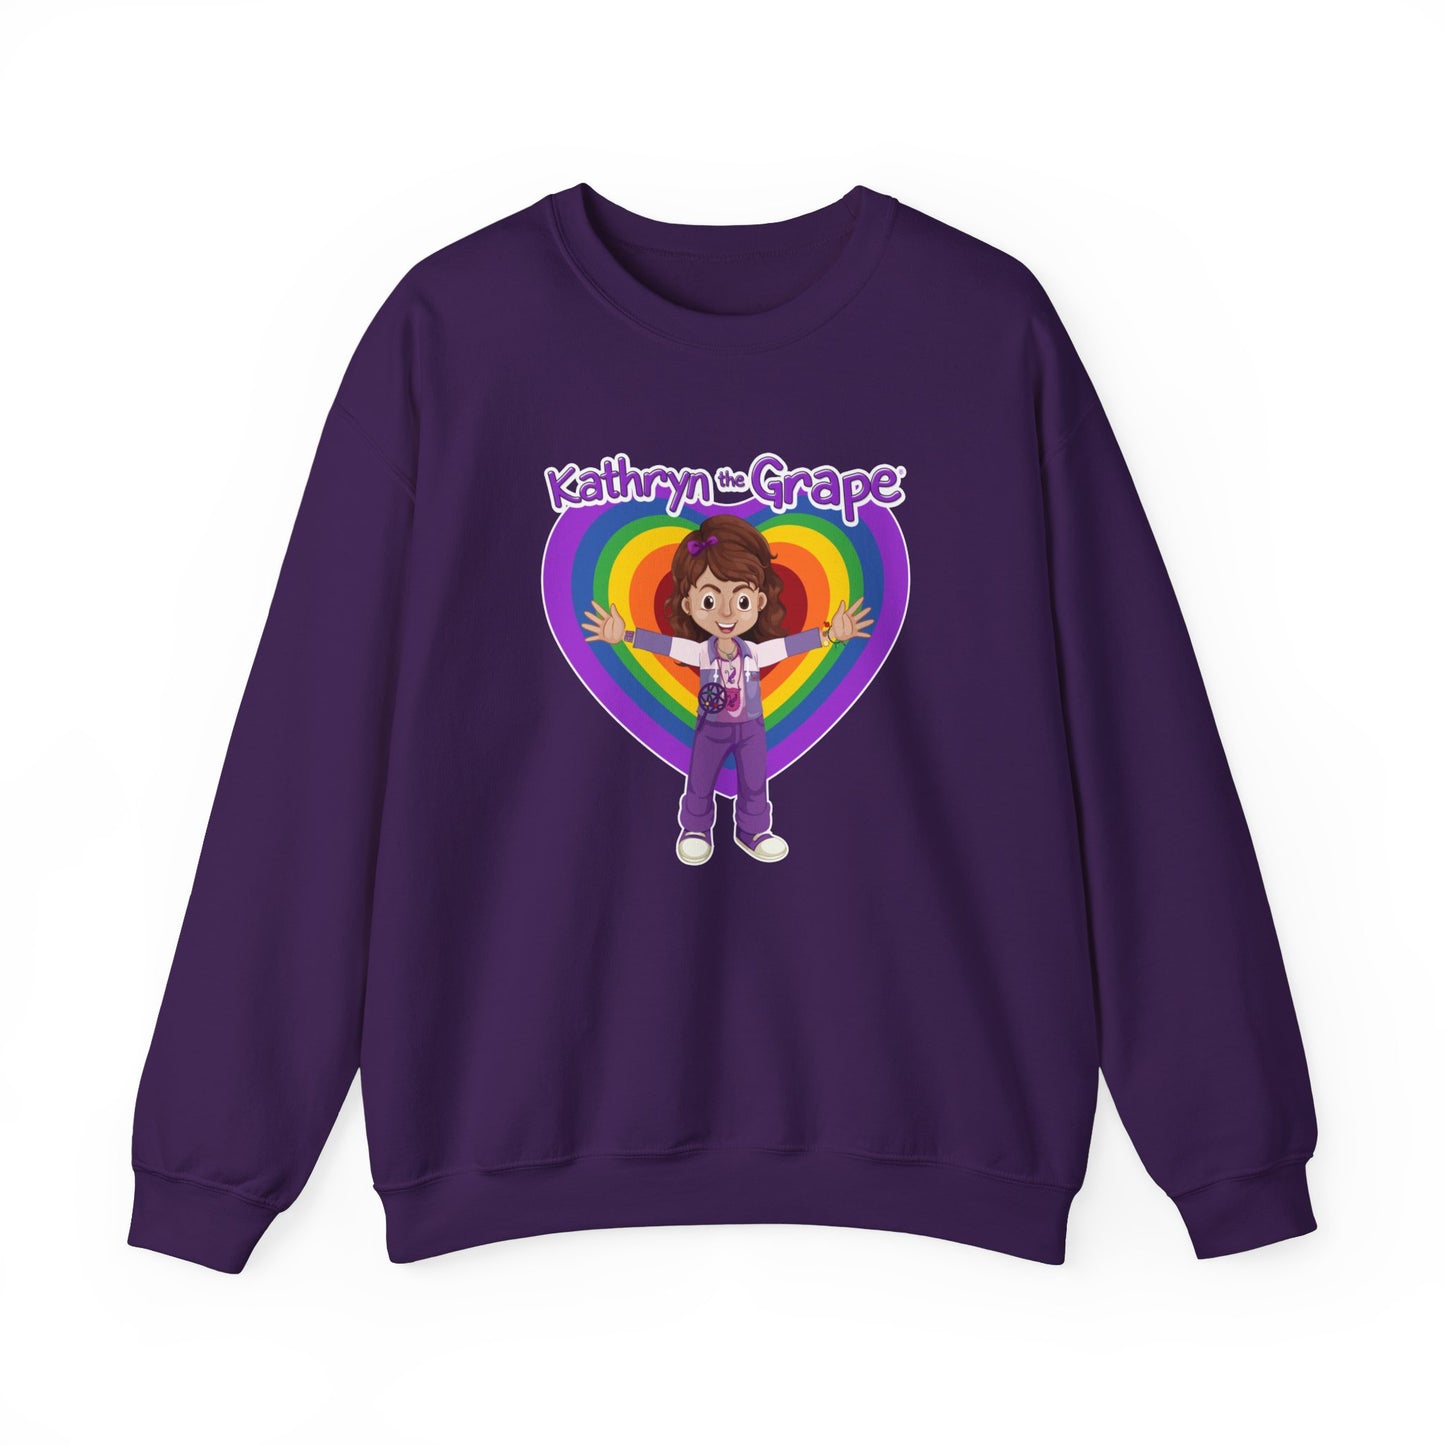 Kathryn the Grape Ripple Love Adult Unisex Heavy Blend™ Crewneck Sweatshirt